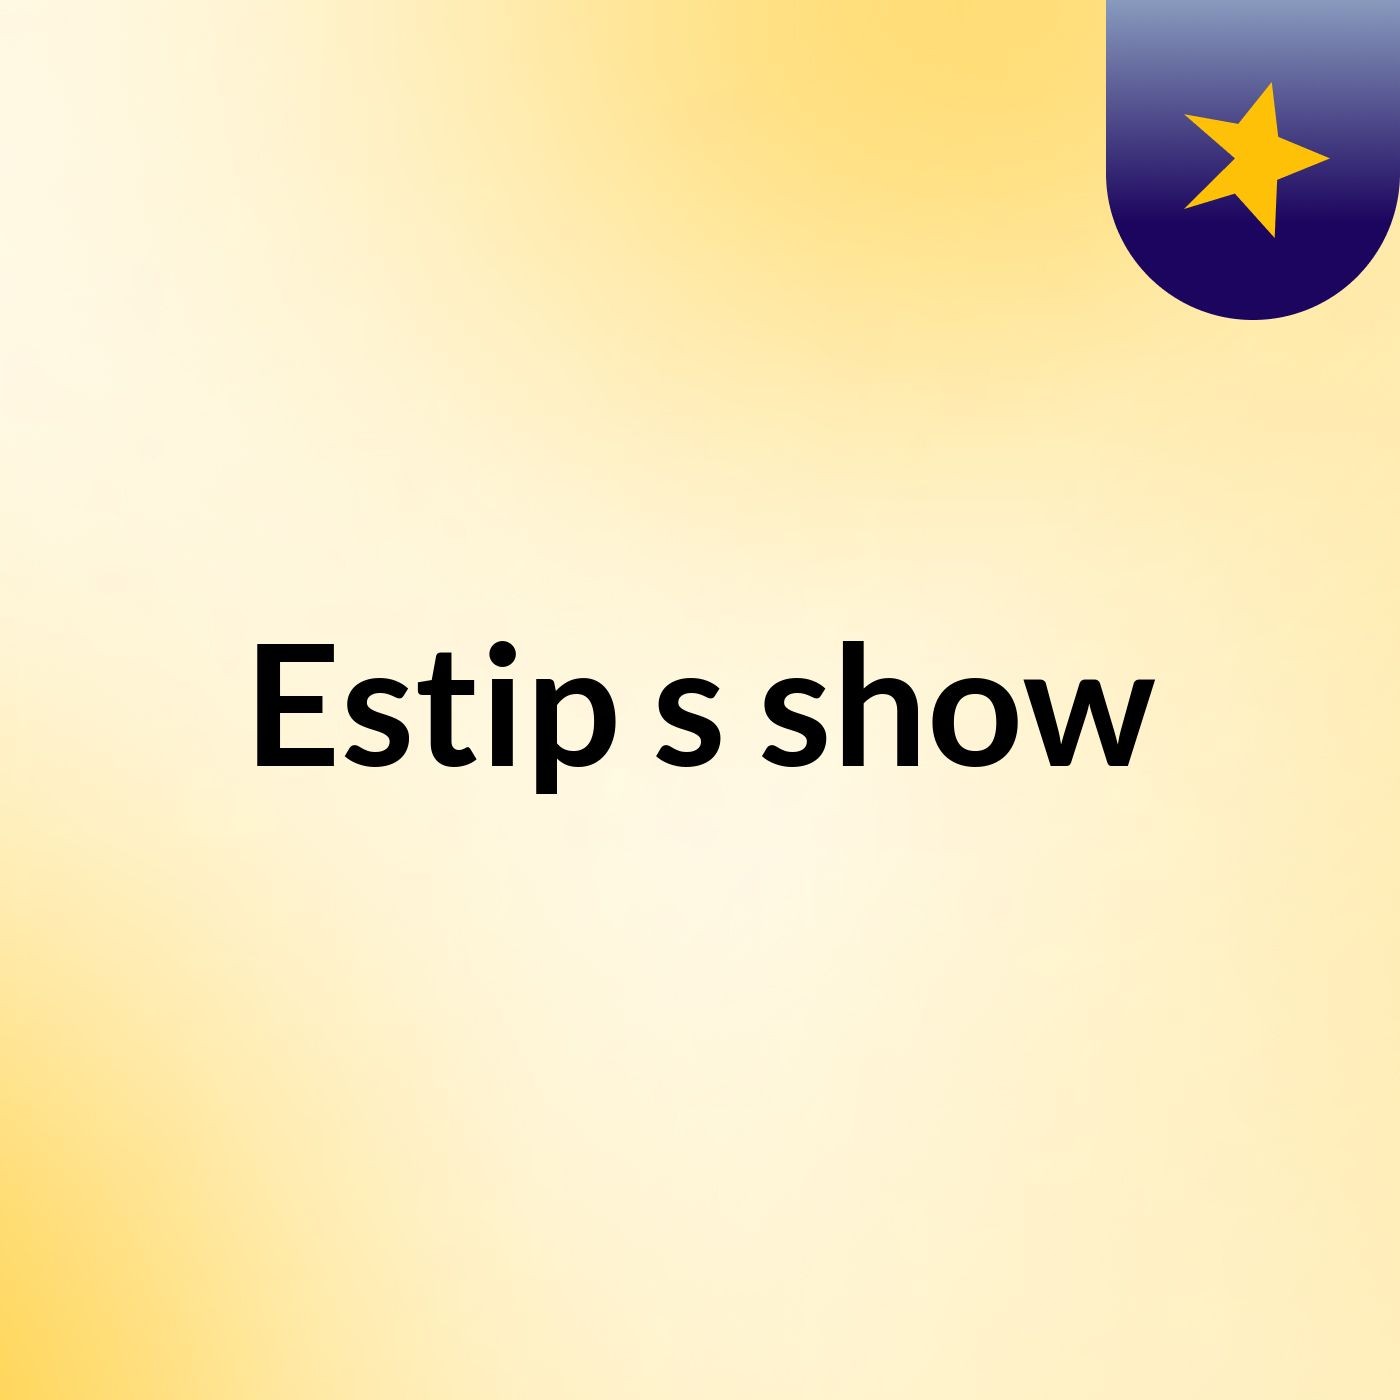 Estip's show